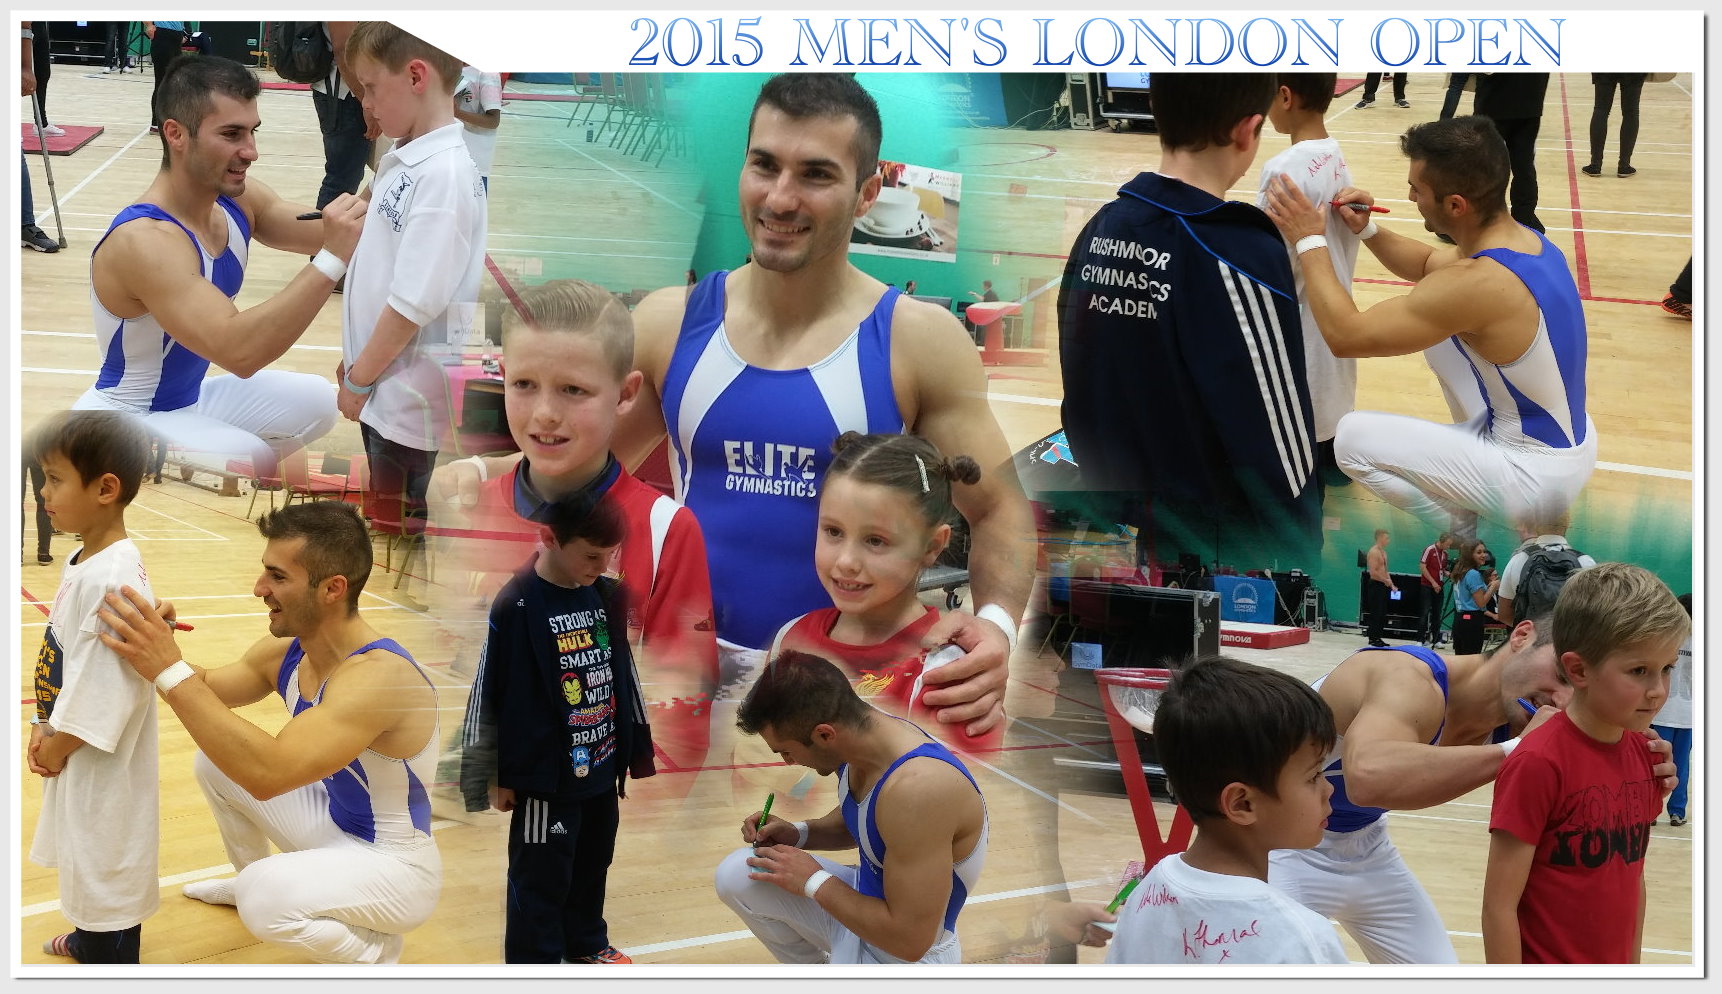 London Open Gymnastics Championships 2015